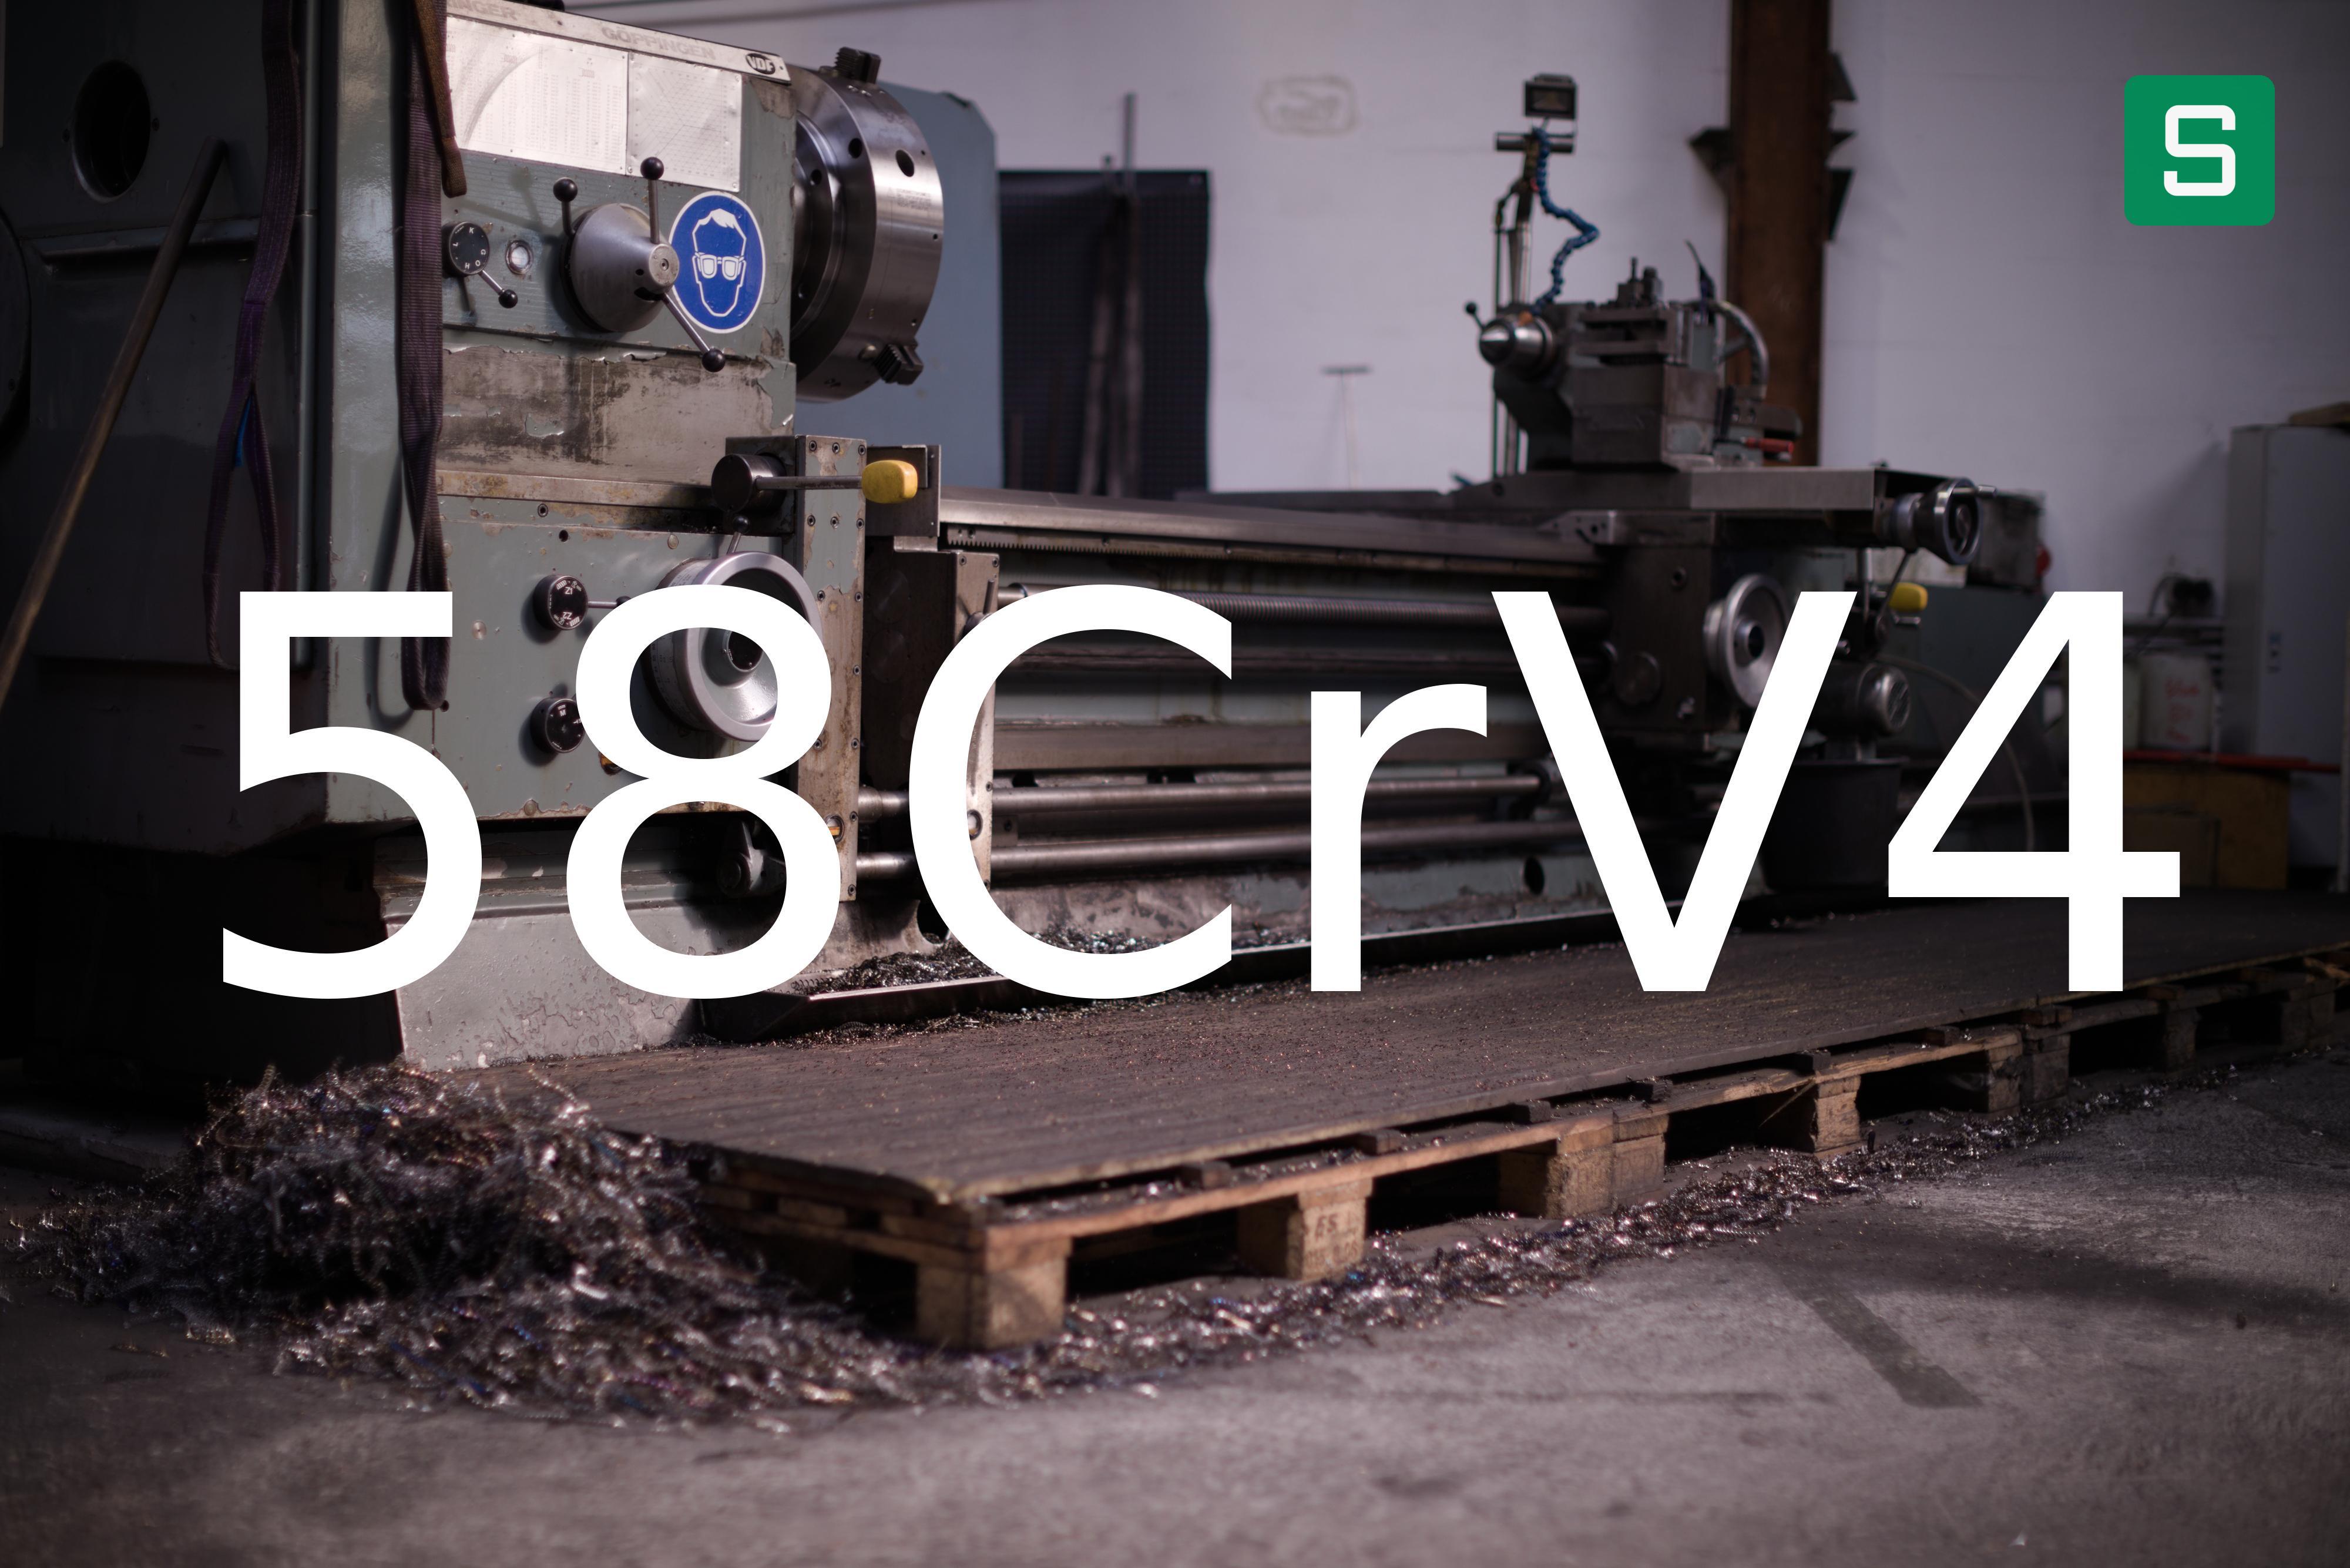 Steel Material: 58CrV4